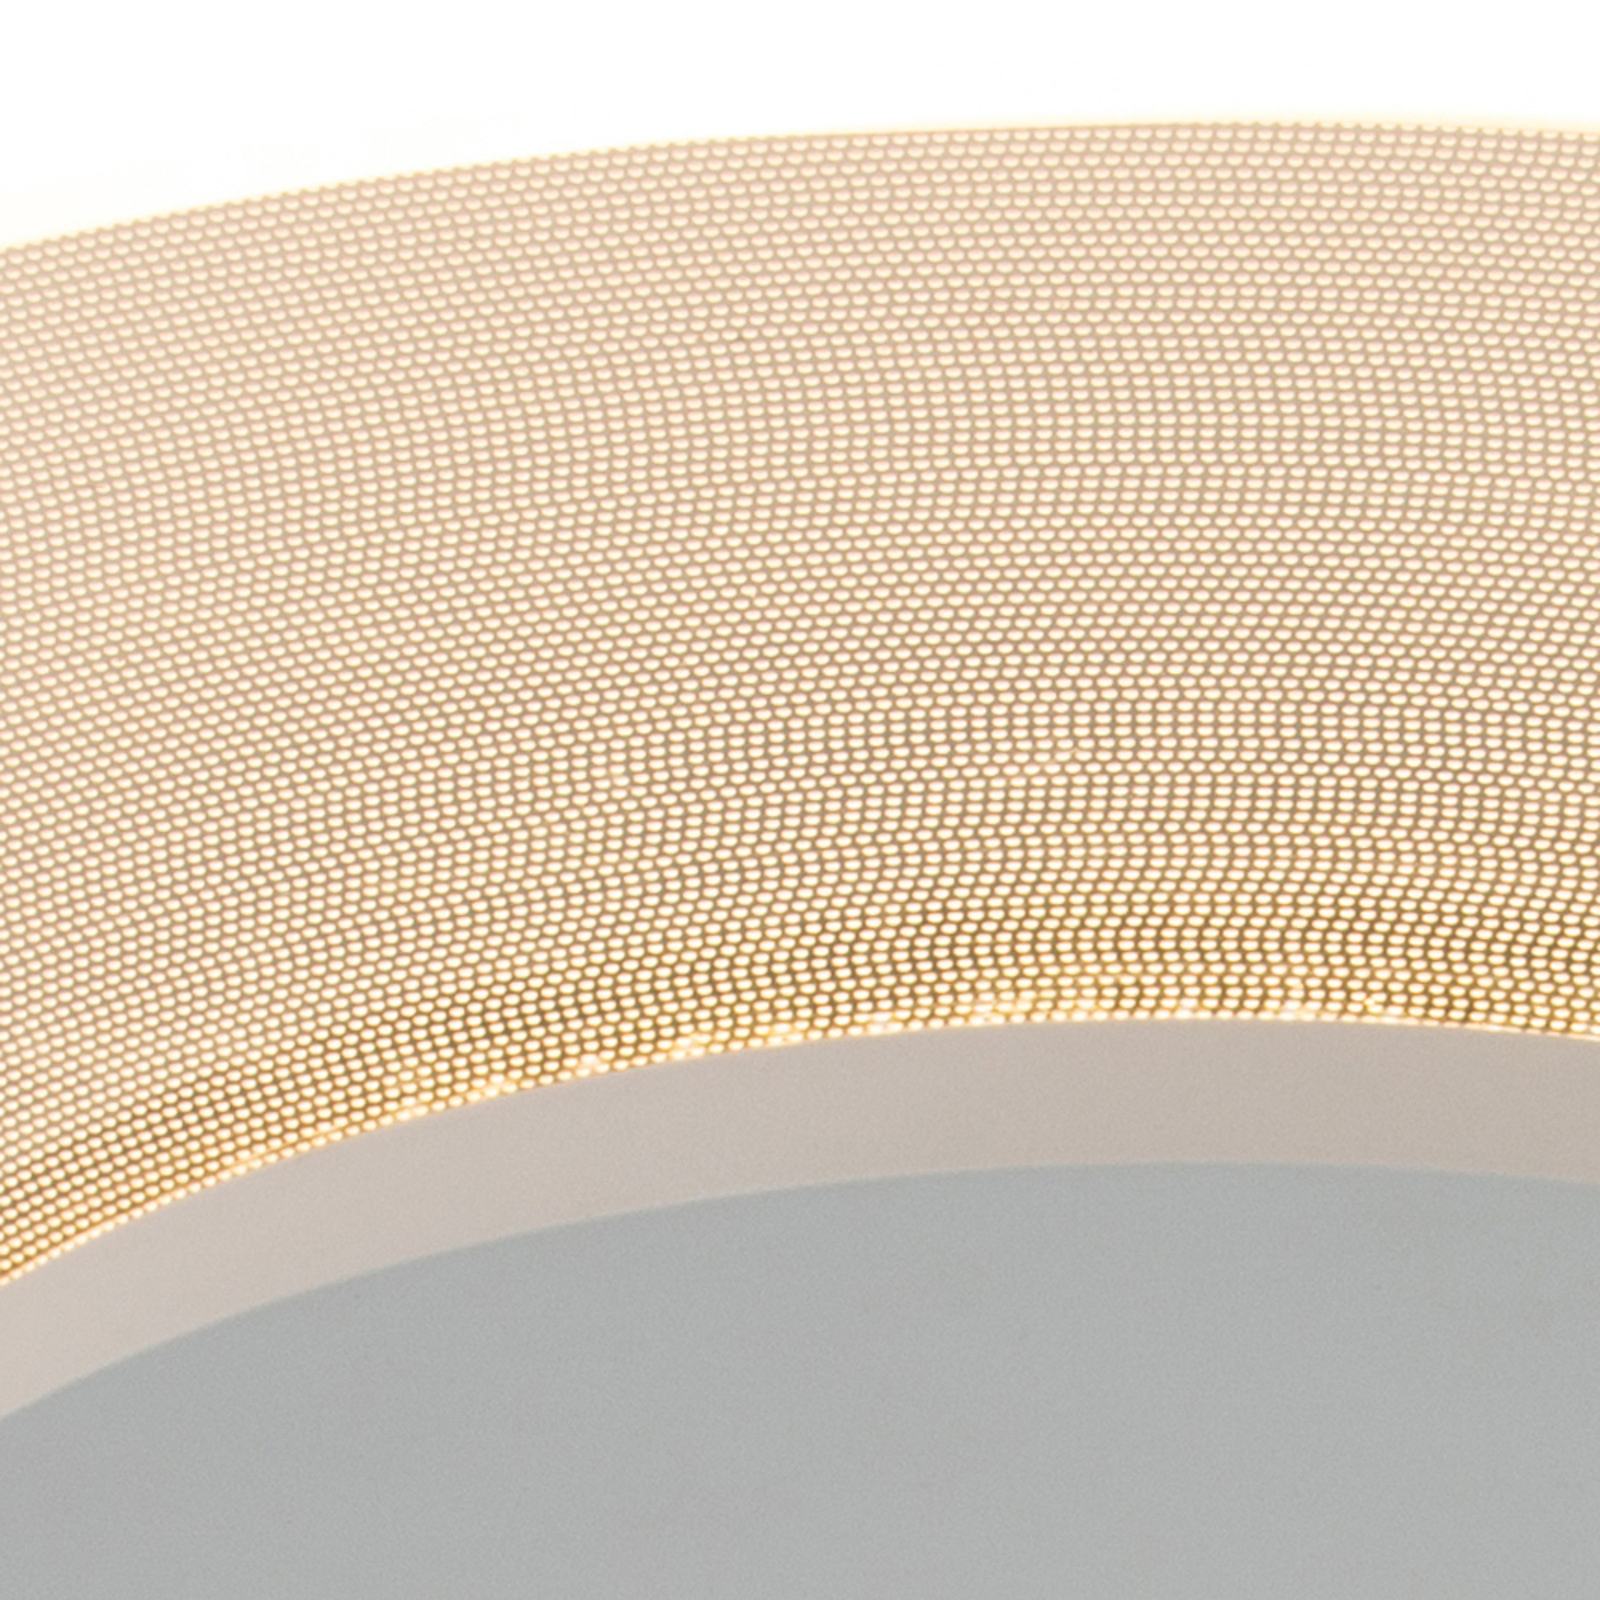 LED-loftslampe Lido, hvid, Ø 36 cm